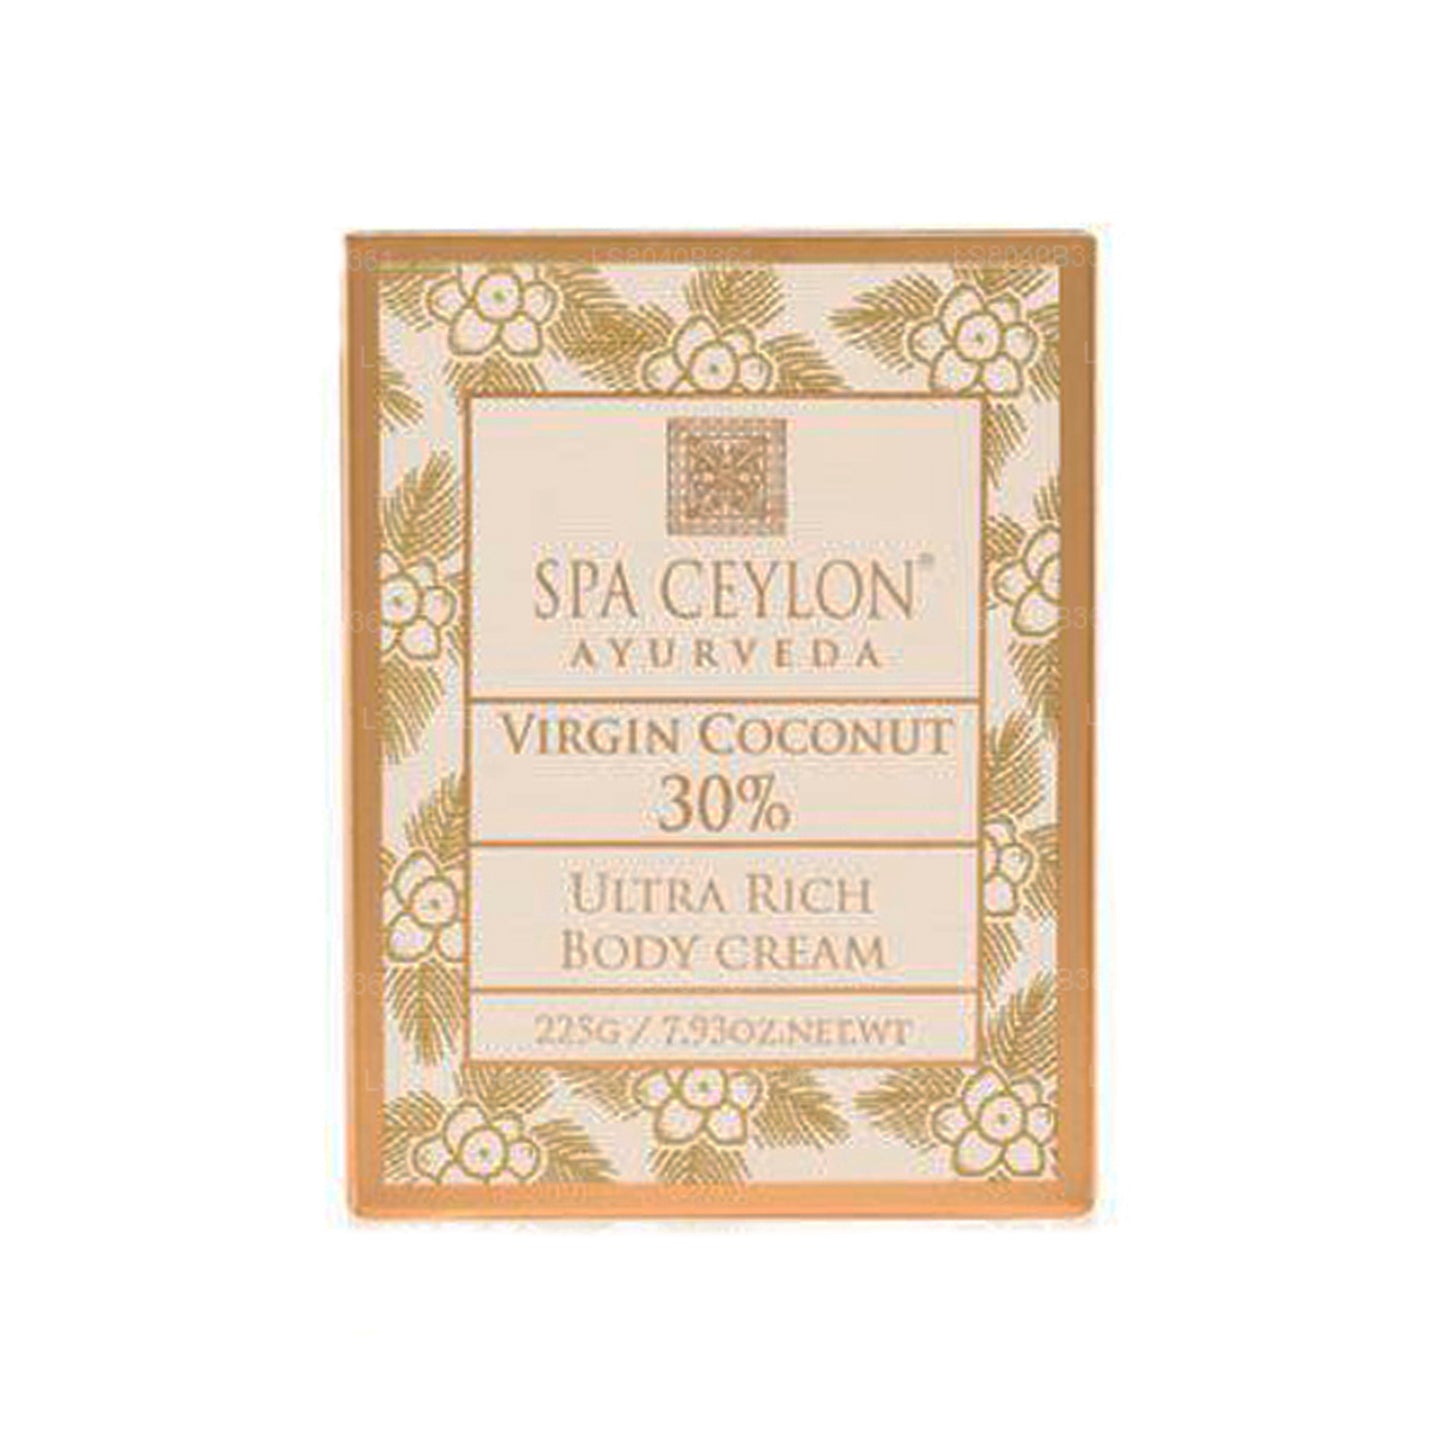 Spa Ceylon Virgin Coconut 30% - Ultra Rich Body Cream (200 g)